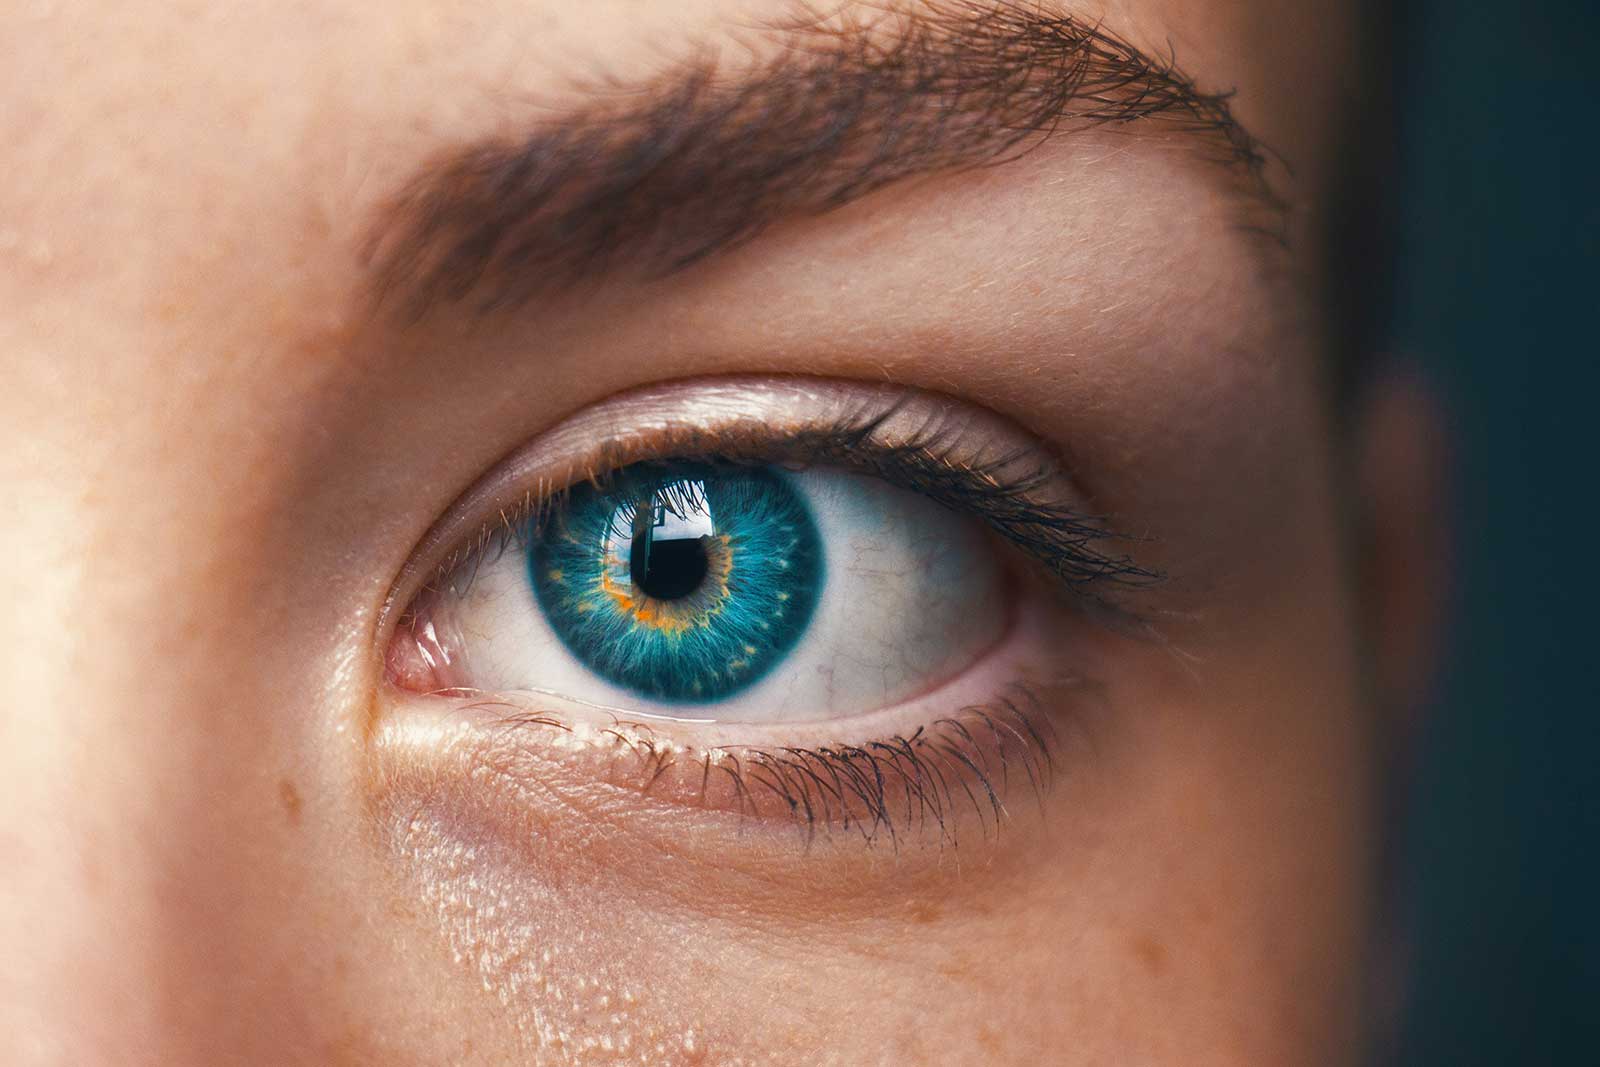 A close up of a blue eye.